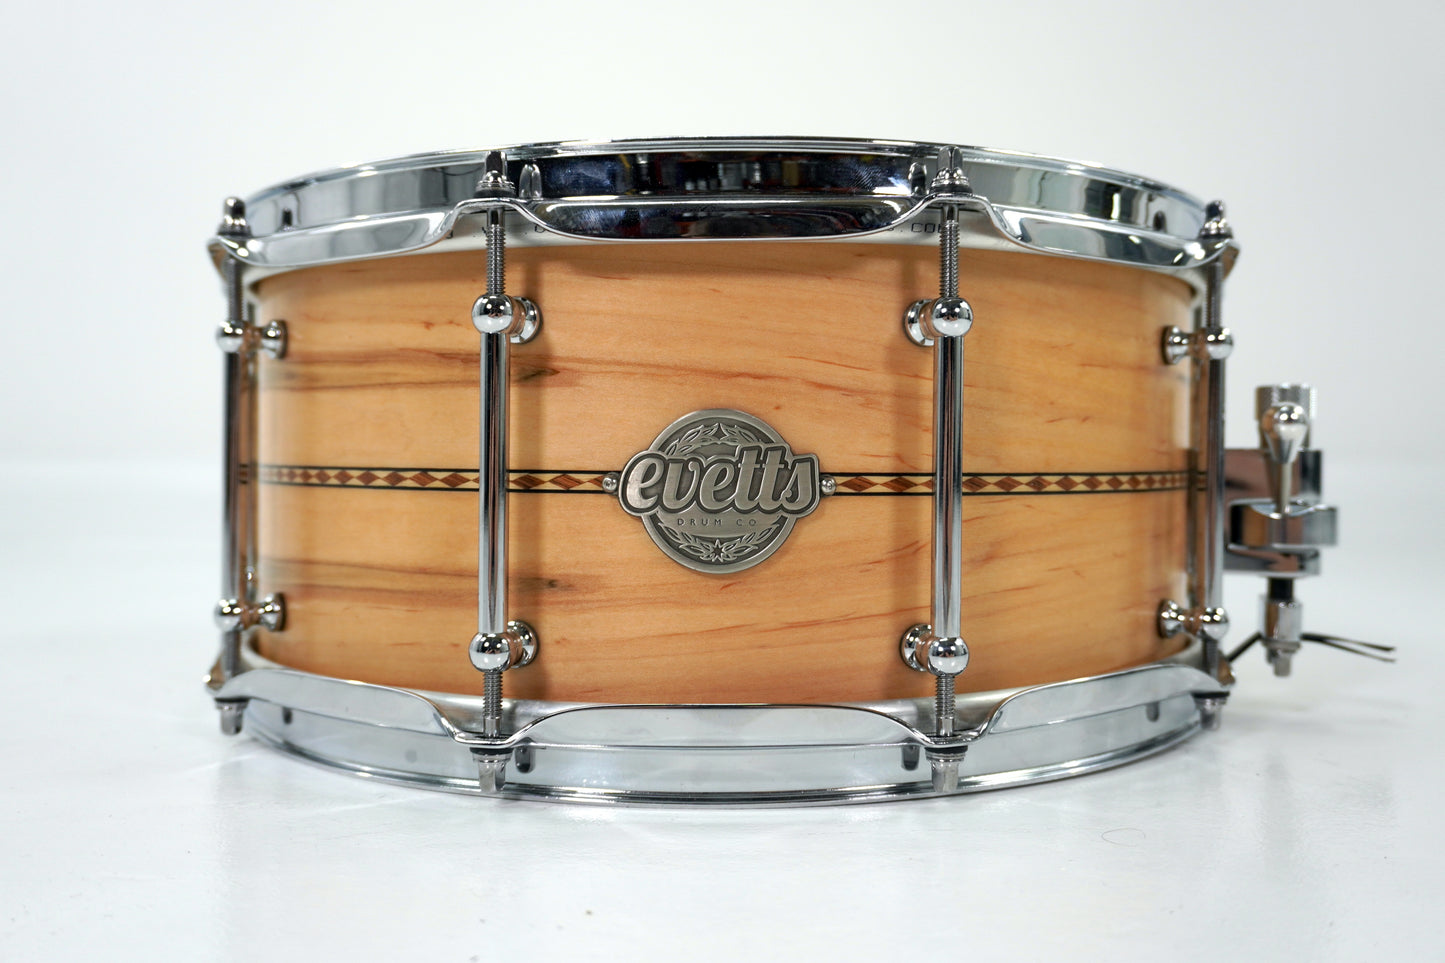 Evetts 14 x 6.5 Tasmanian Blackwood Snare Drum, Wormy Maple with Diamond Inlay